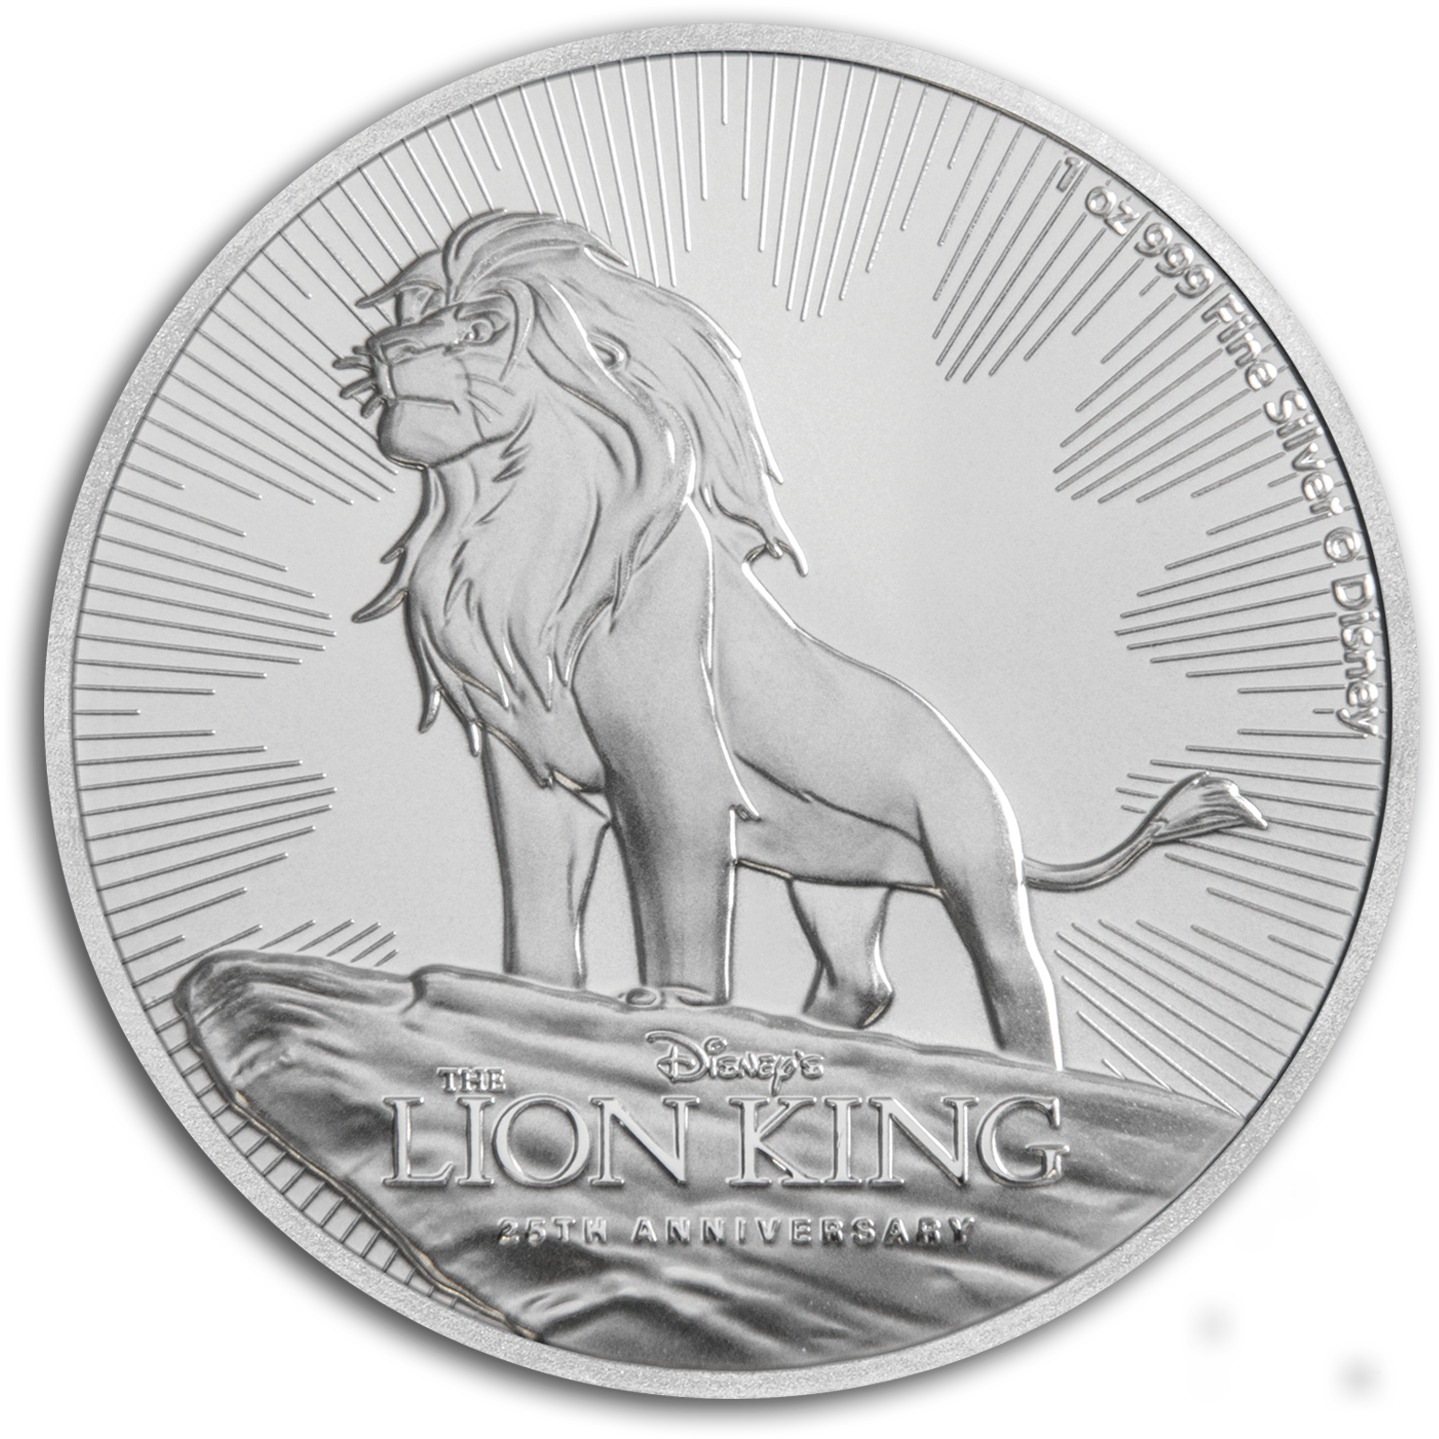 Lion King25th Anniversary Coin